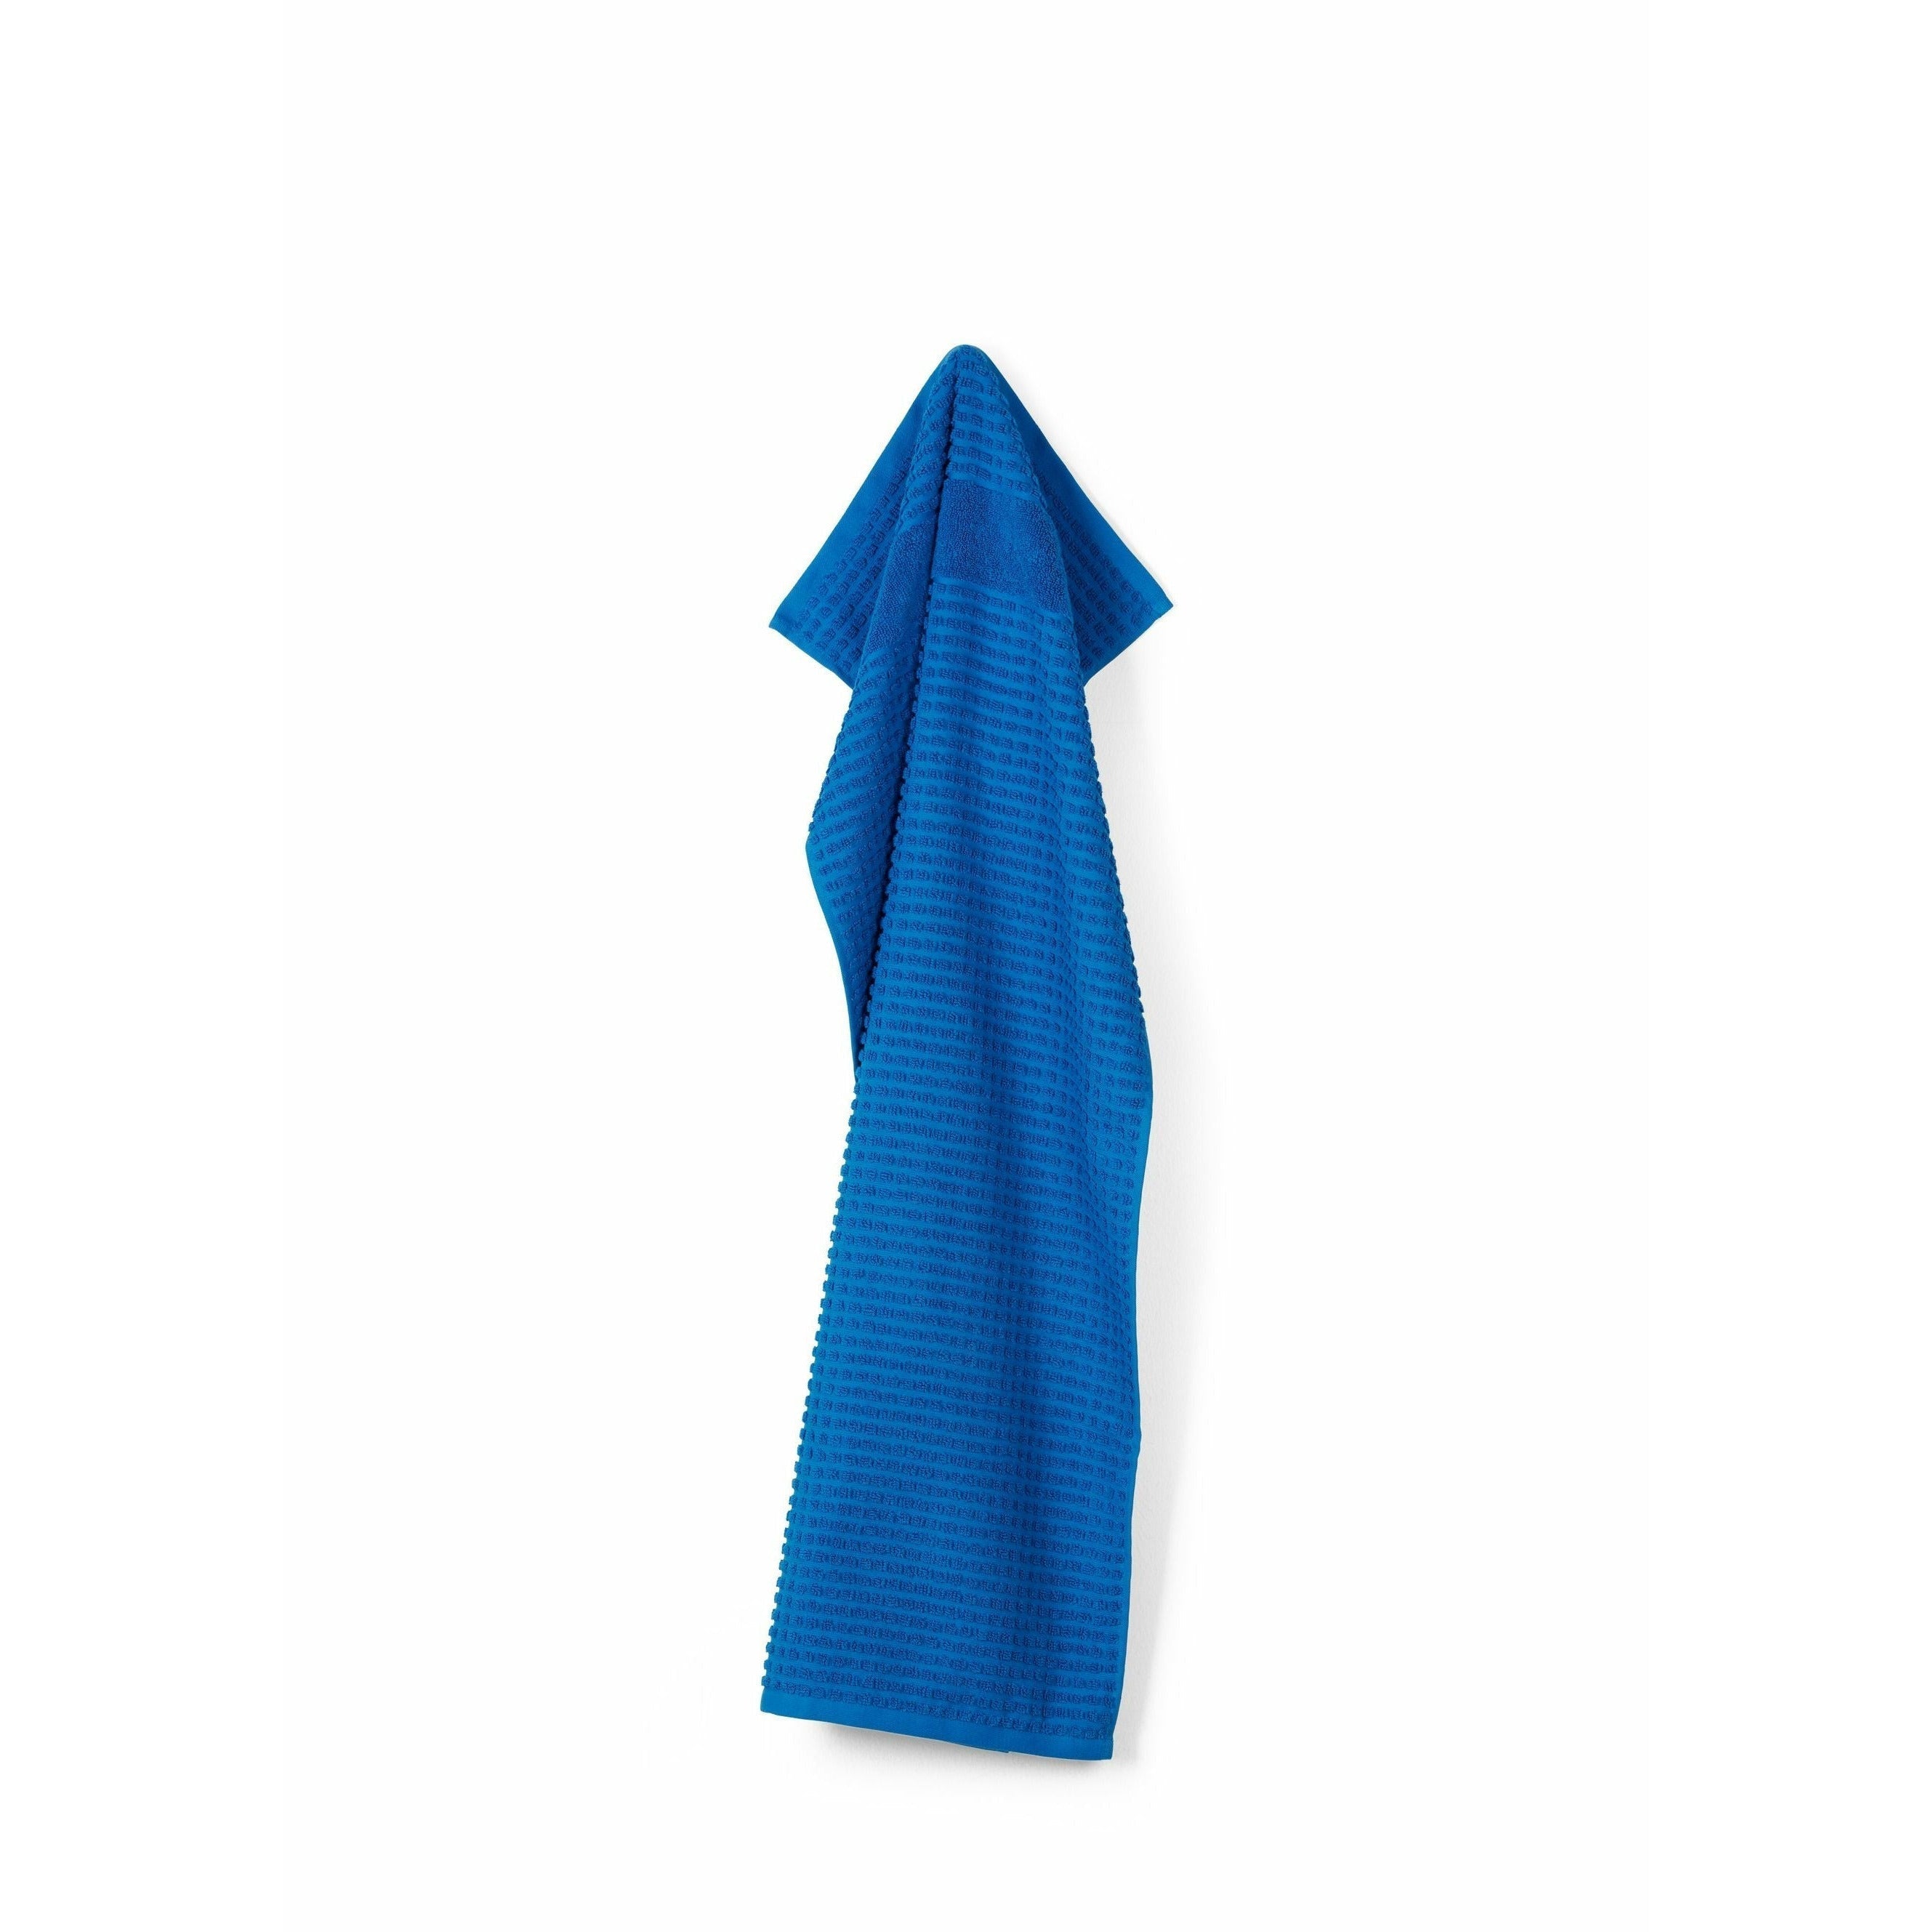 Juna Check Towel 50x100 Cm, Blue